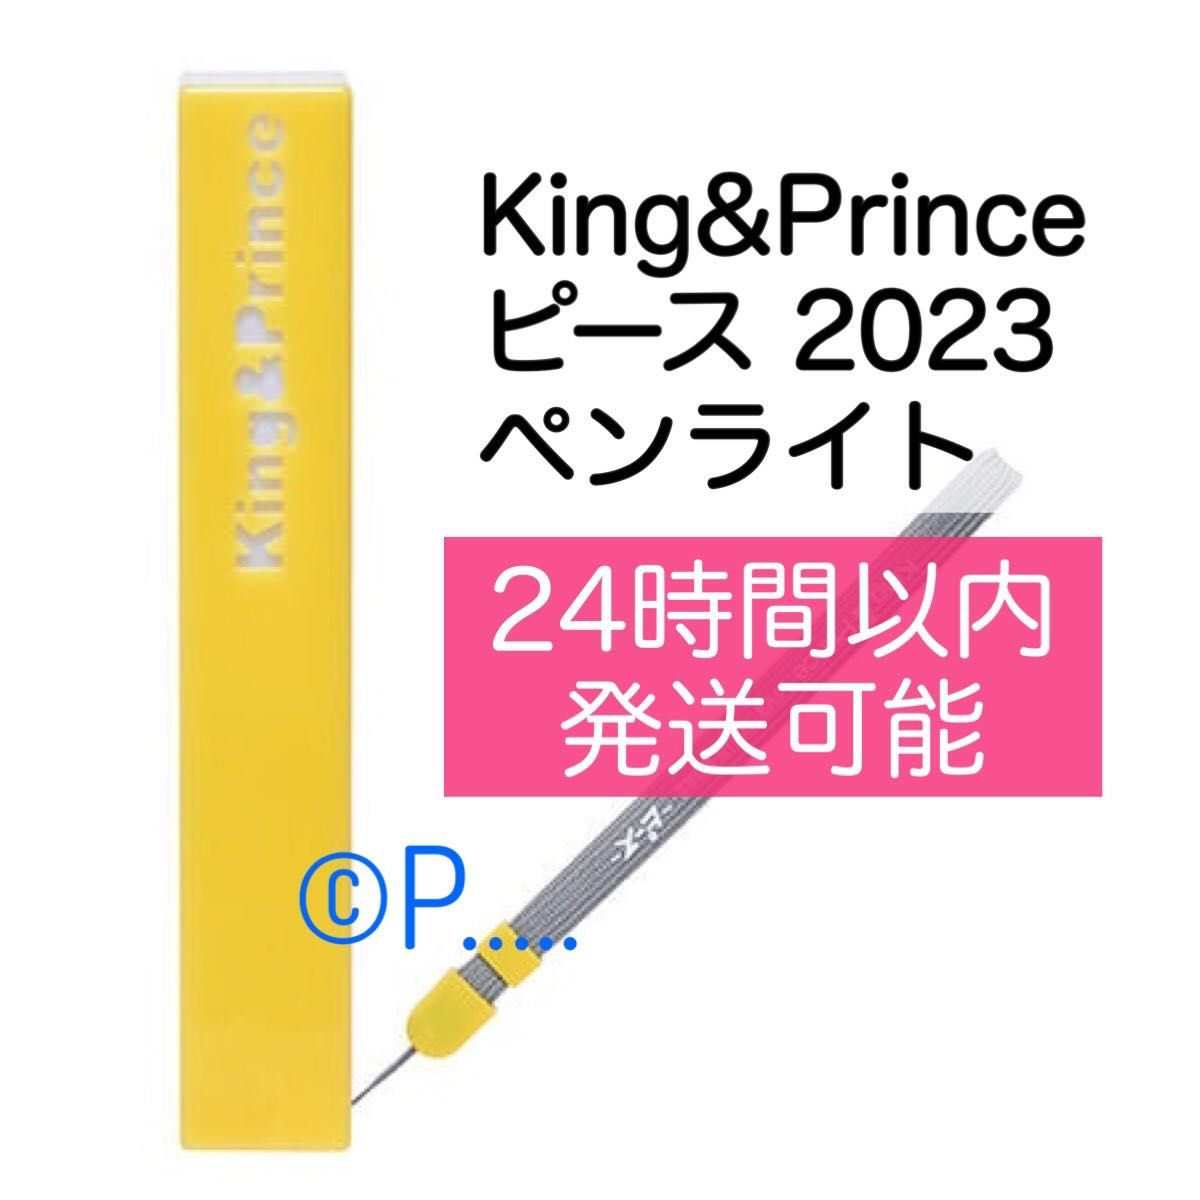 King&Prince キンプリ ピース ペンライト うちわ 団扇 2023